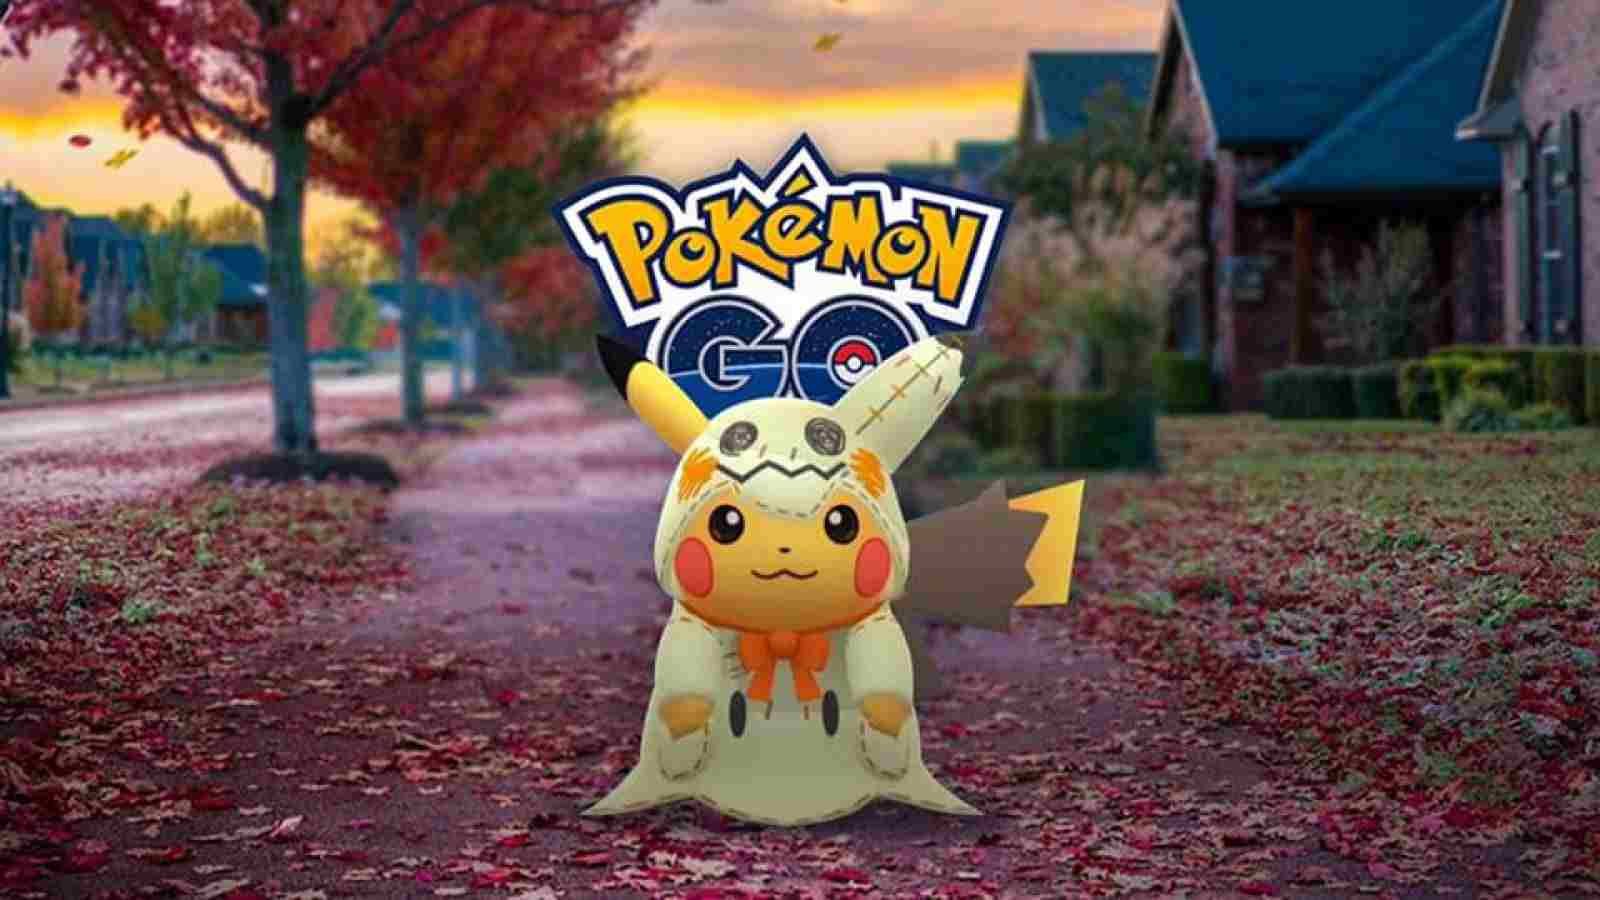 Pokemon Go Halloween Event 2019 details revealed, Darkrai coming to